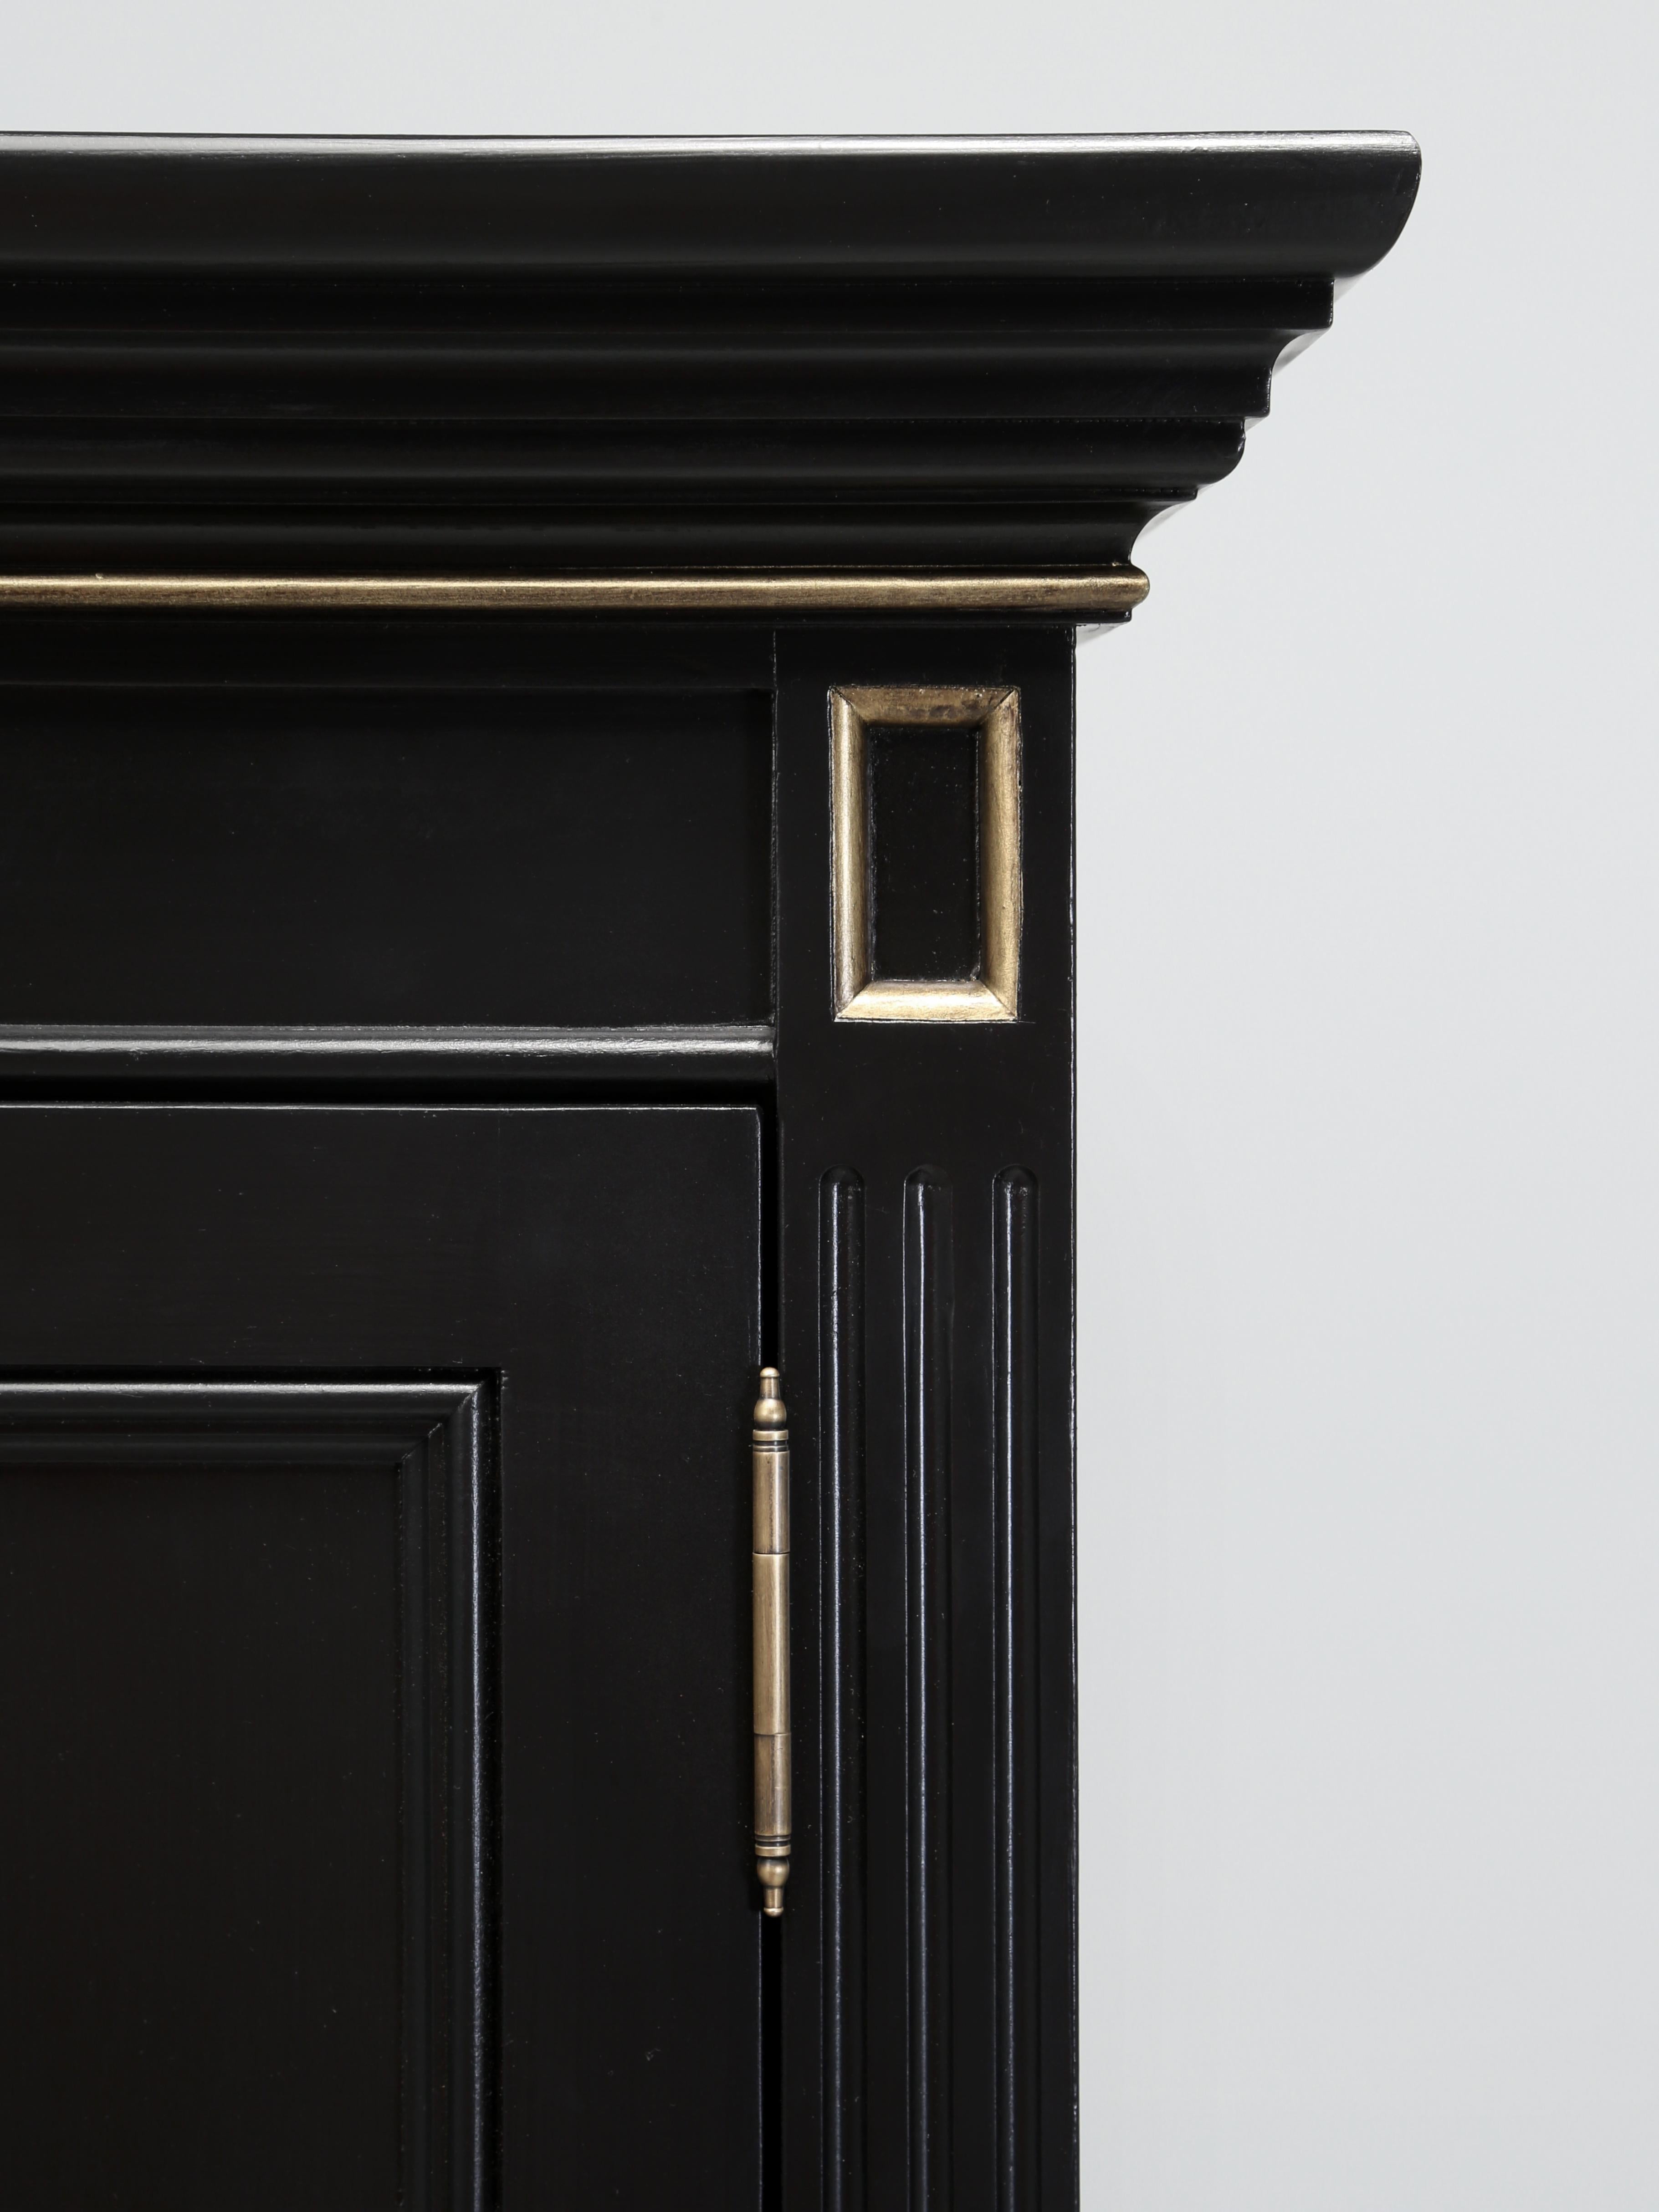 Cast Jacque Adnet Inspired Bespoke Cabinet Bi-Fold Doors Built to Order Any Dimension For Sale